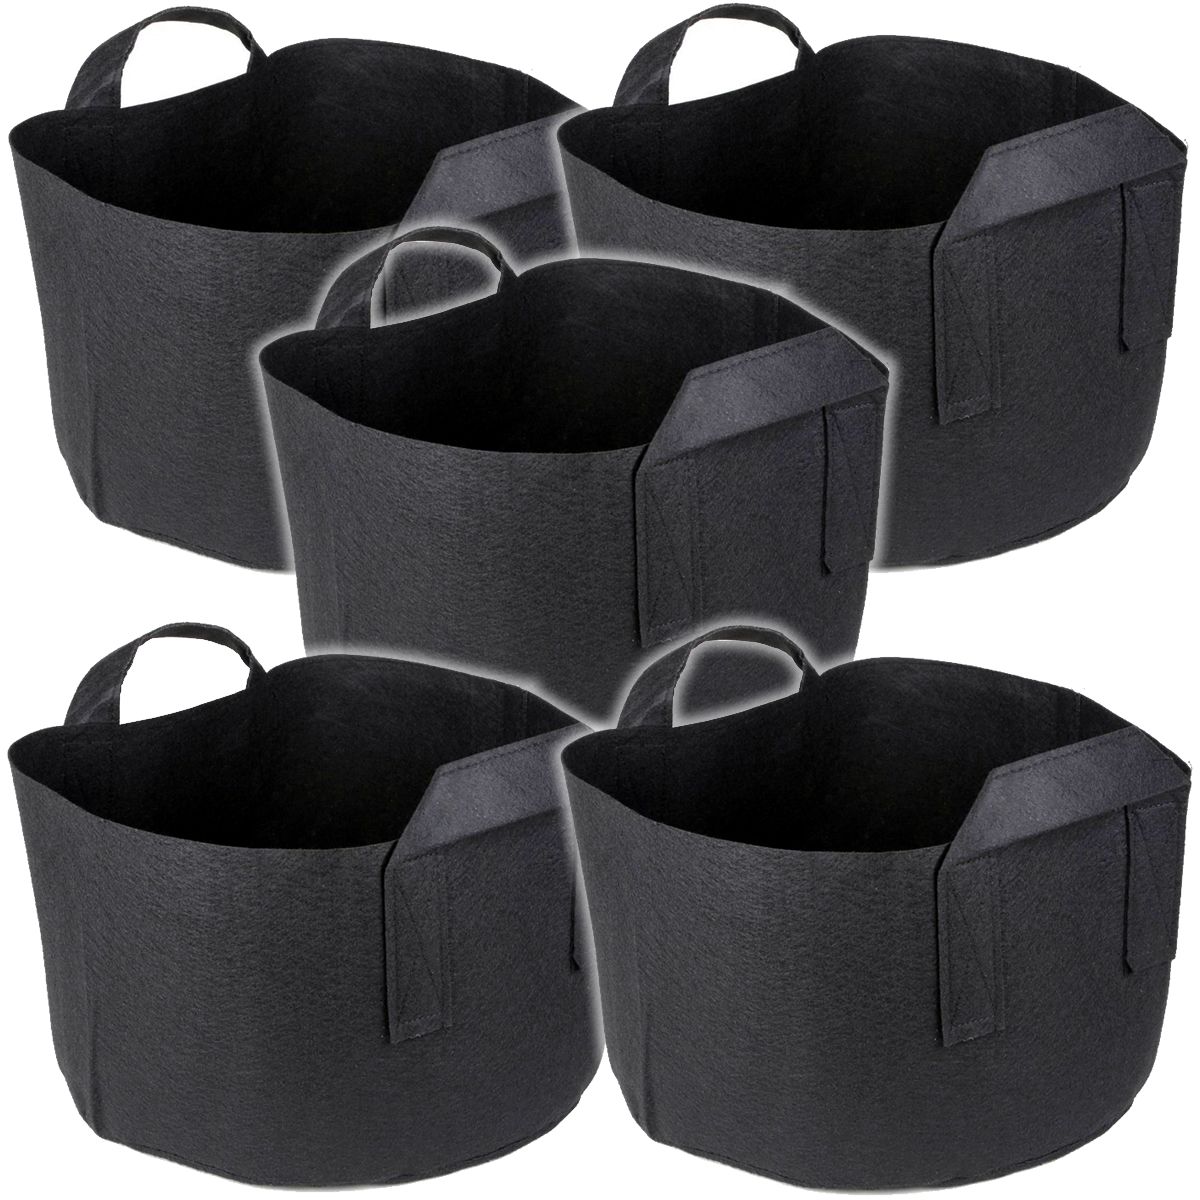 5x Black Grow Bags Aeration Fabric Pots w/Handles Root 1/2/3/5/7/10/15 Gallon 